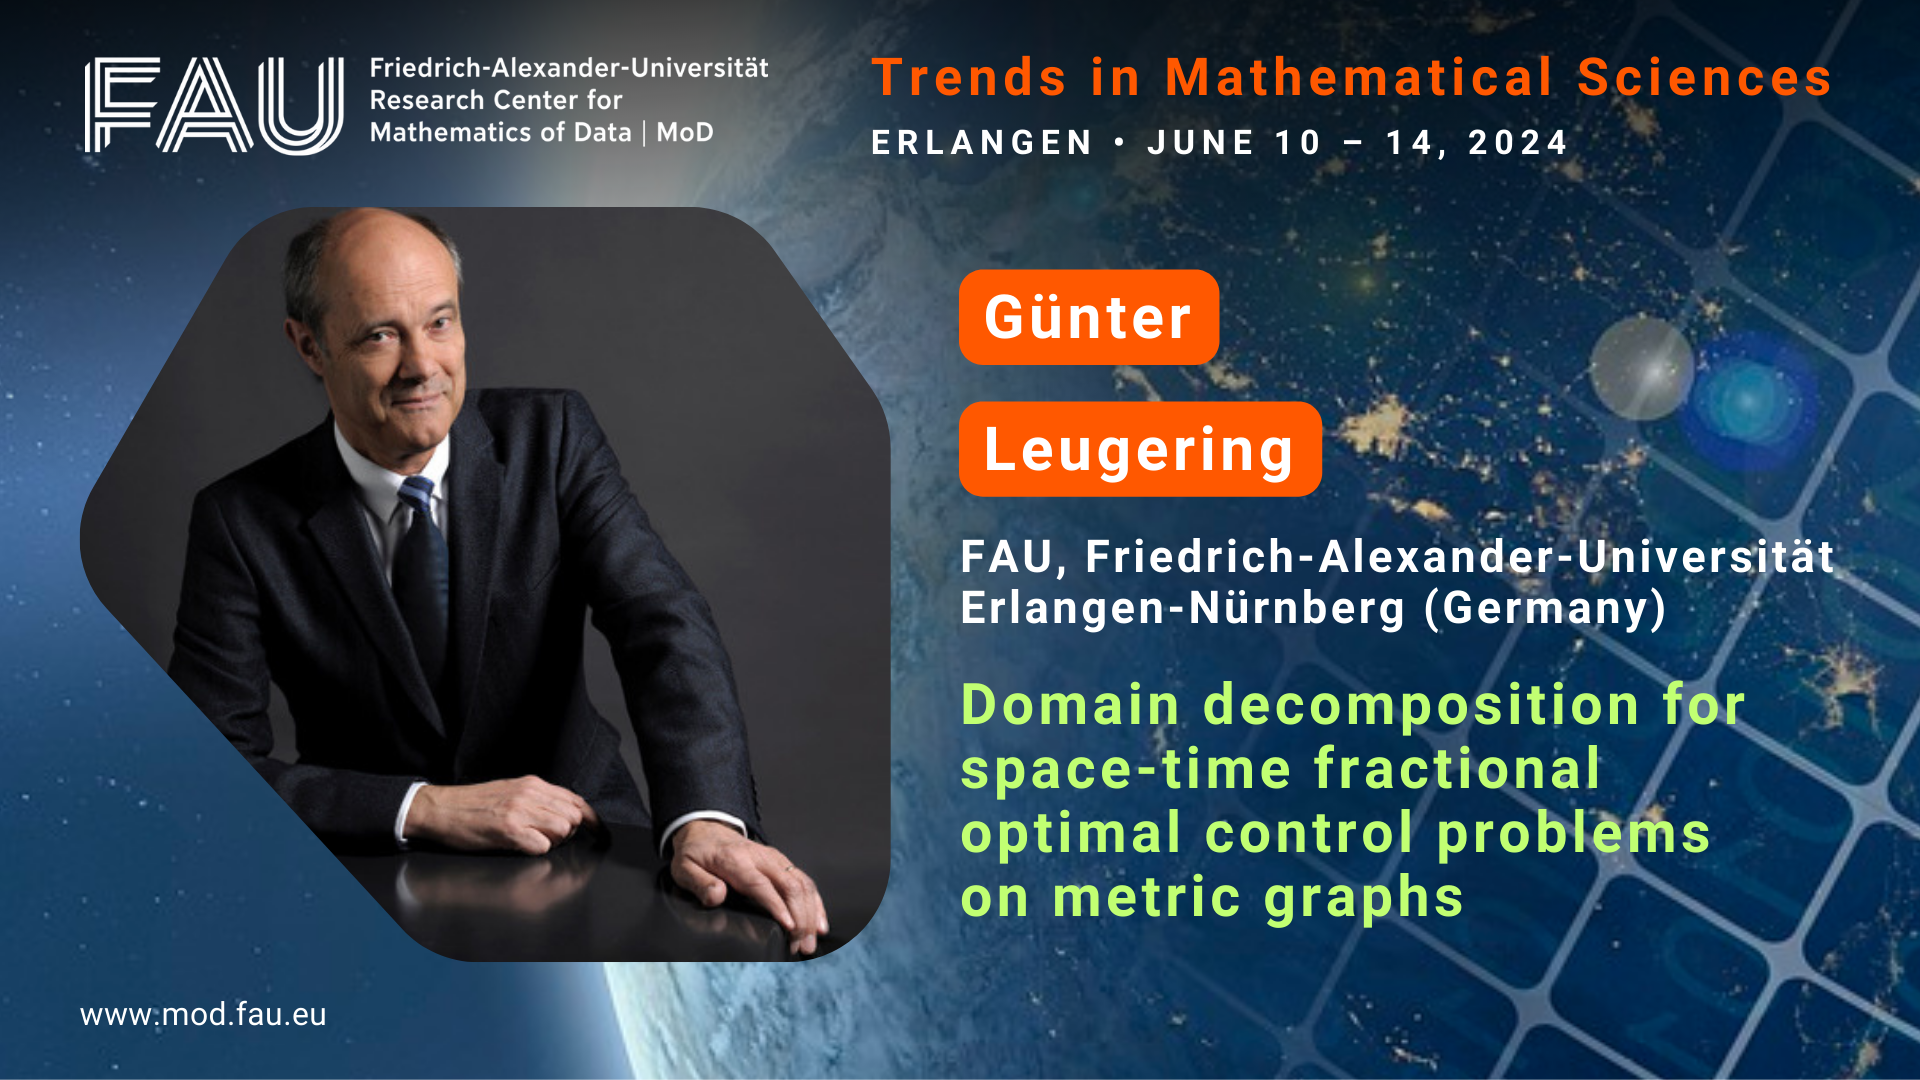 Günter Leugering - cover FAU MoD TrendsInMaths2024